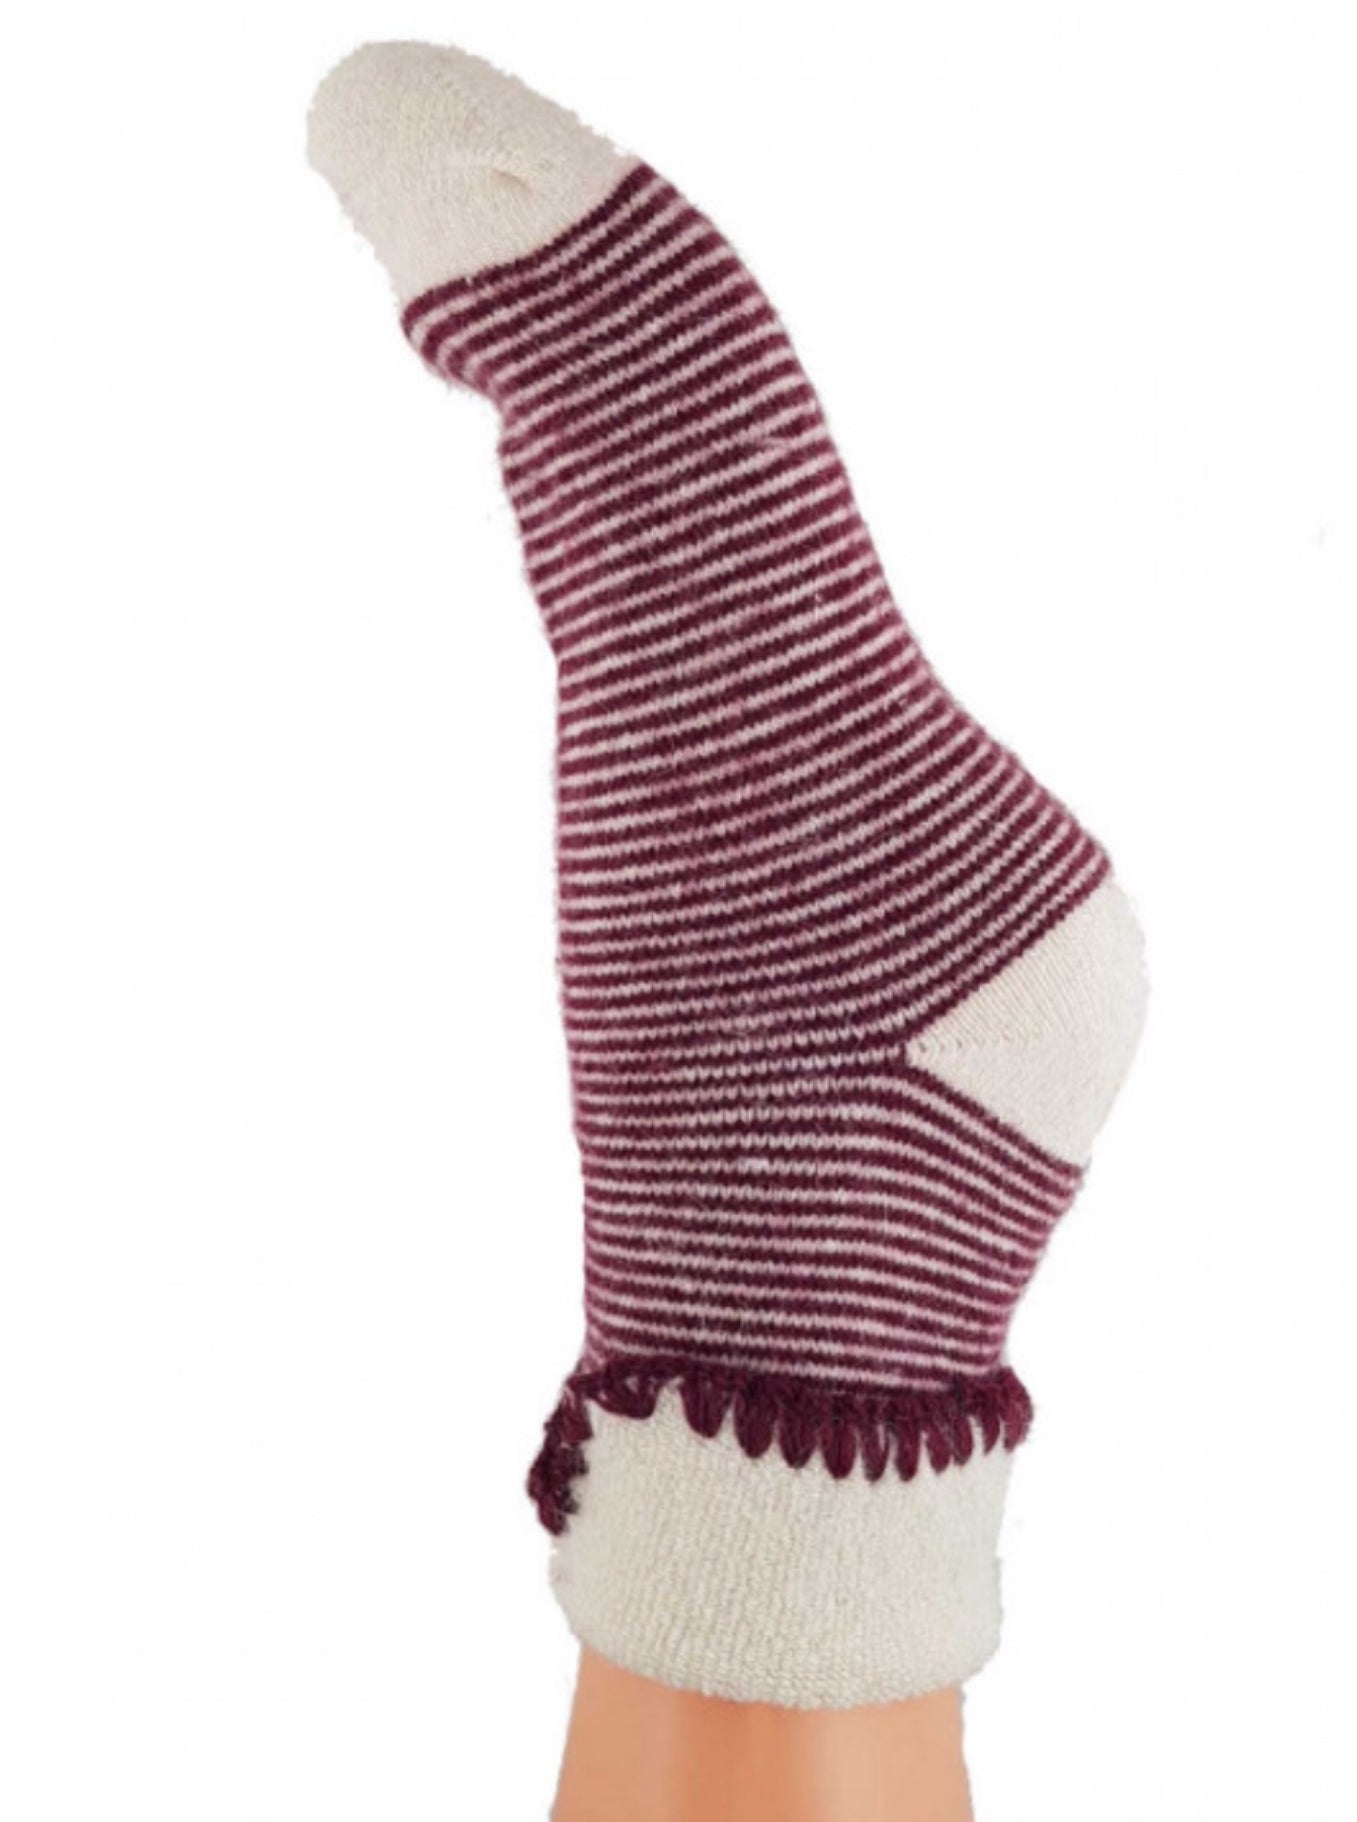 Red and cream striped cuff sock